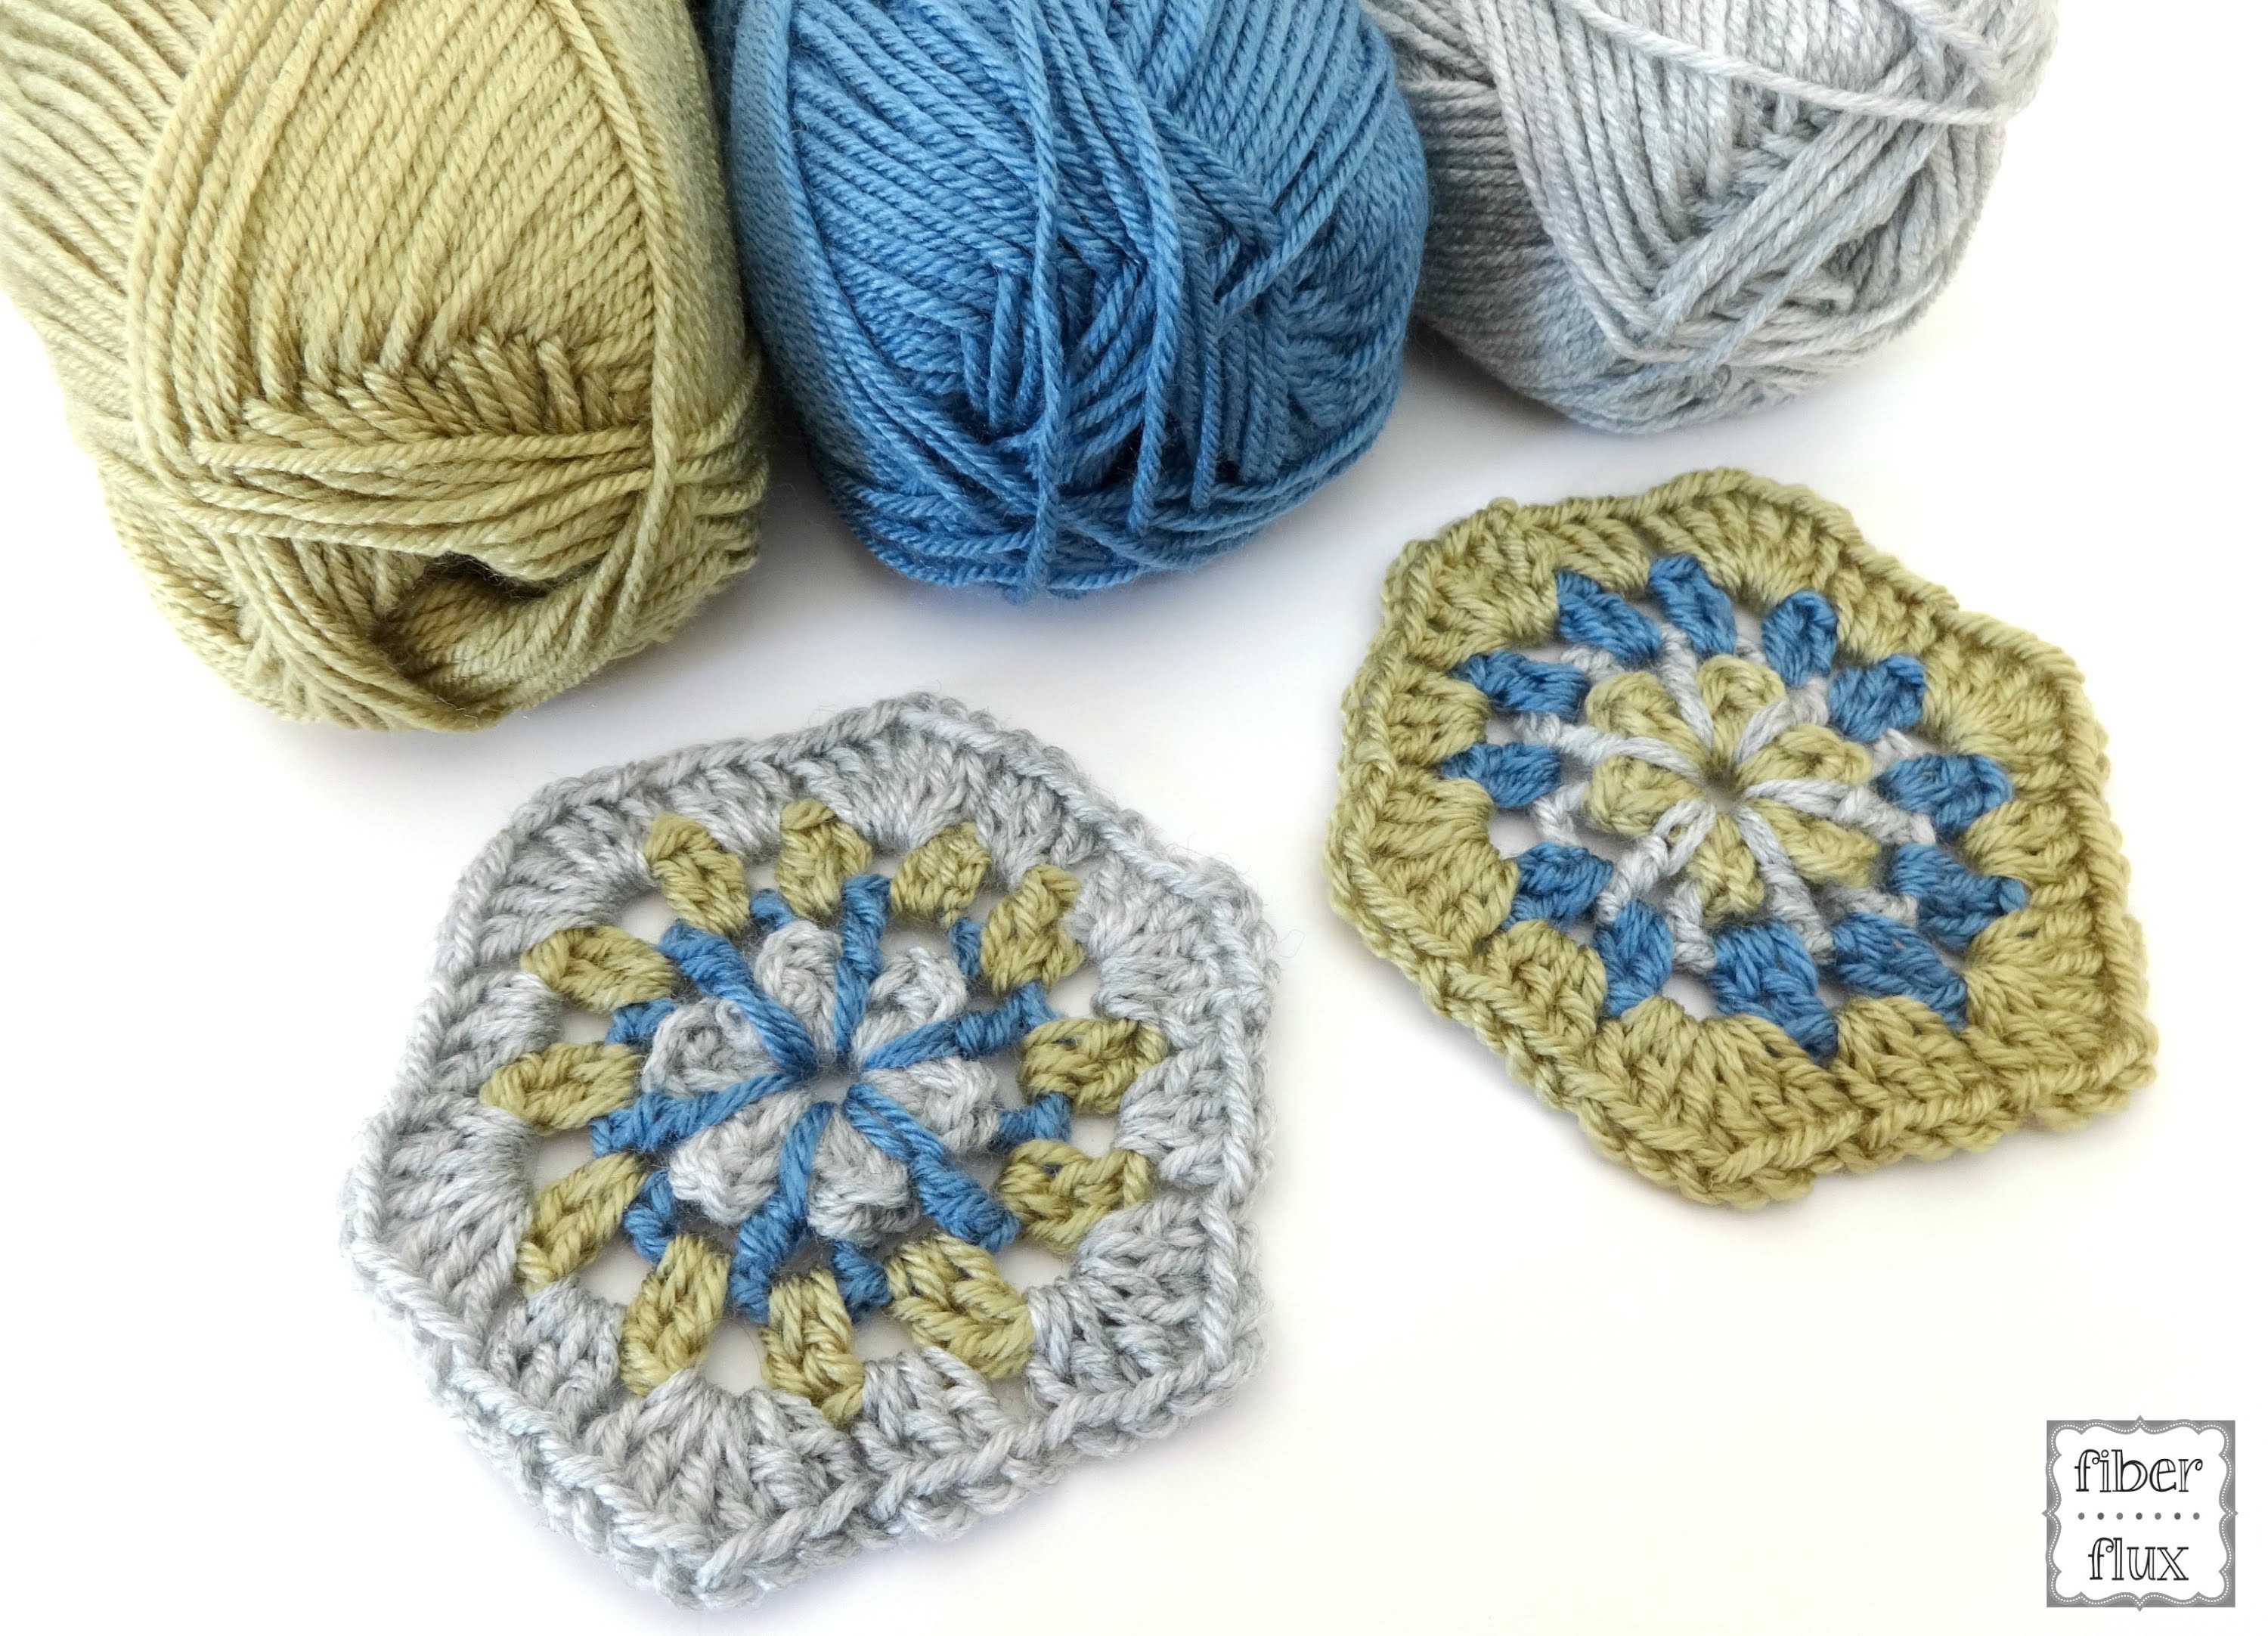 Episode 190: How To Crochet the Strawflower Hexagon Motif